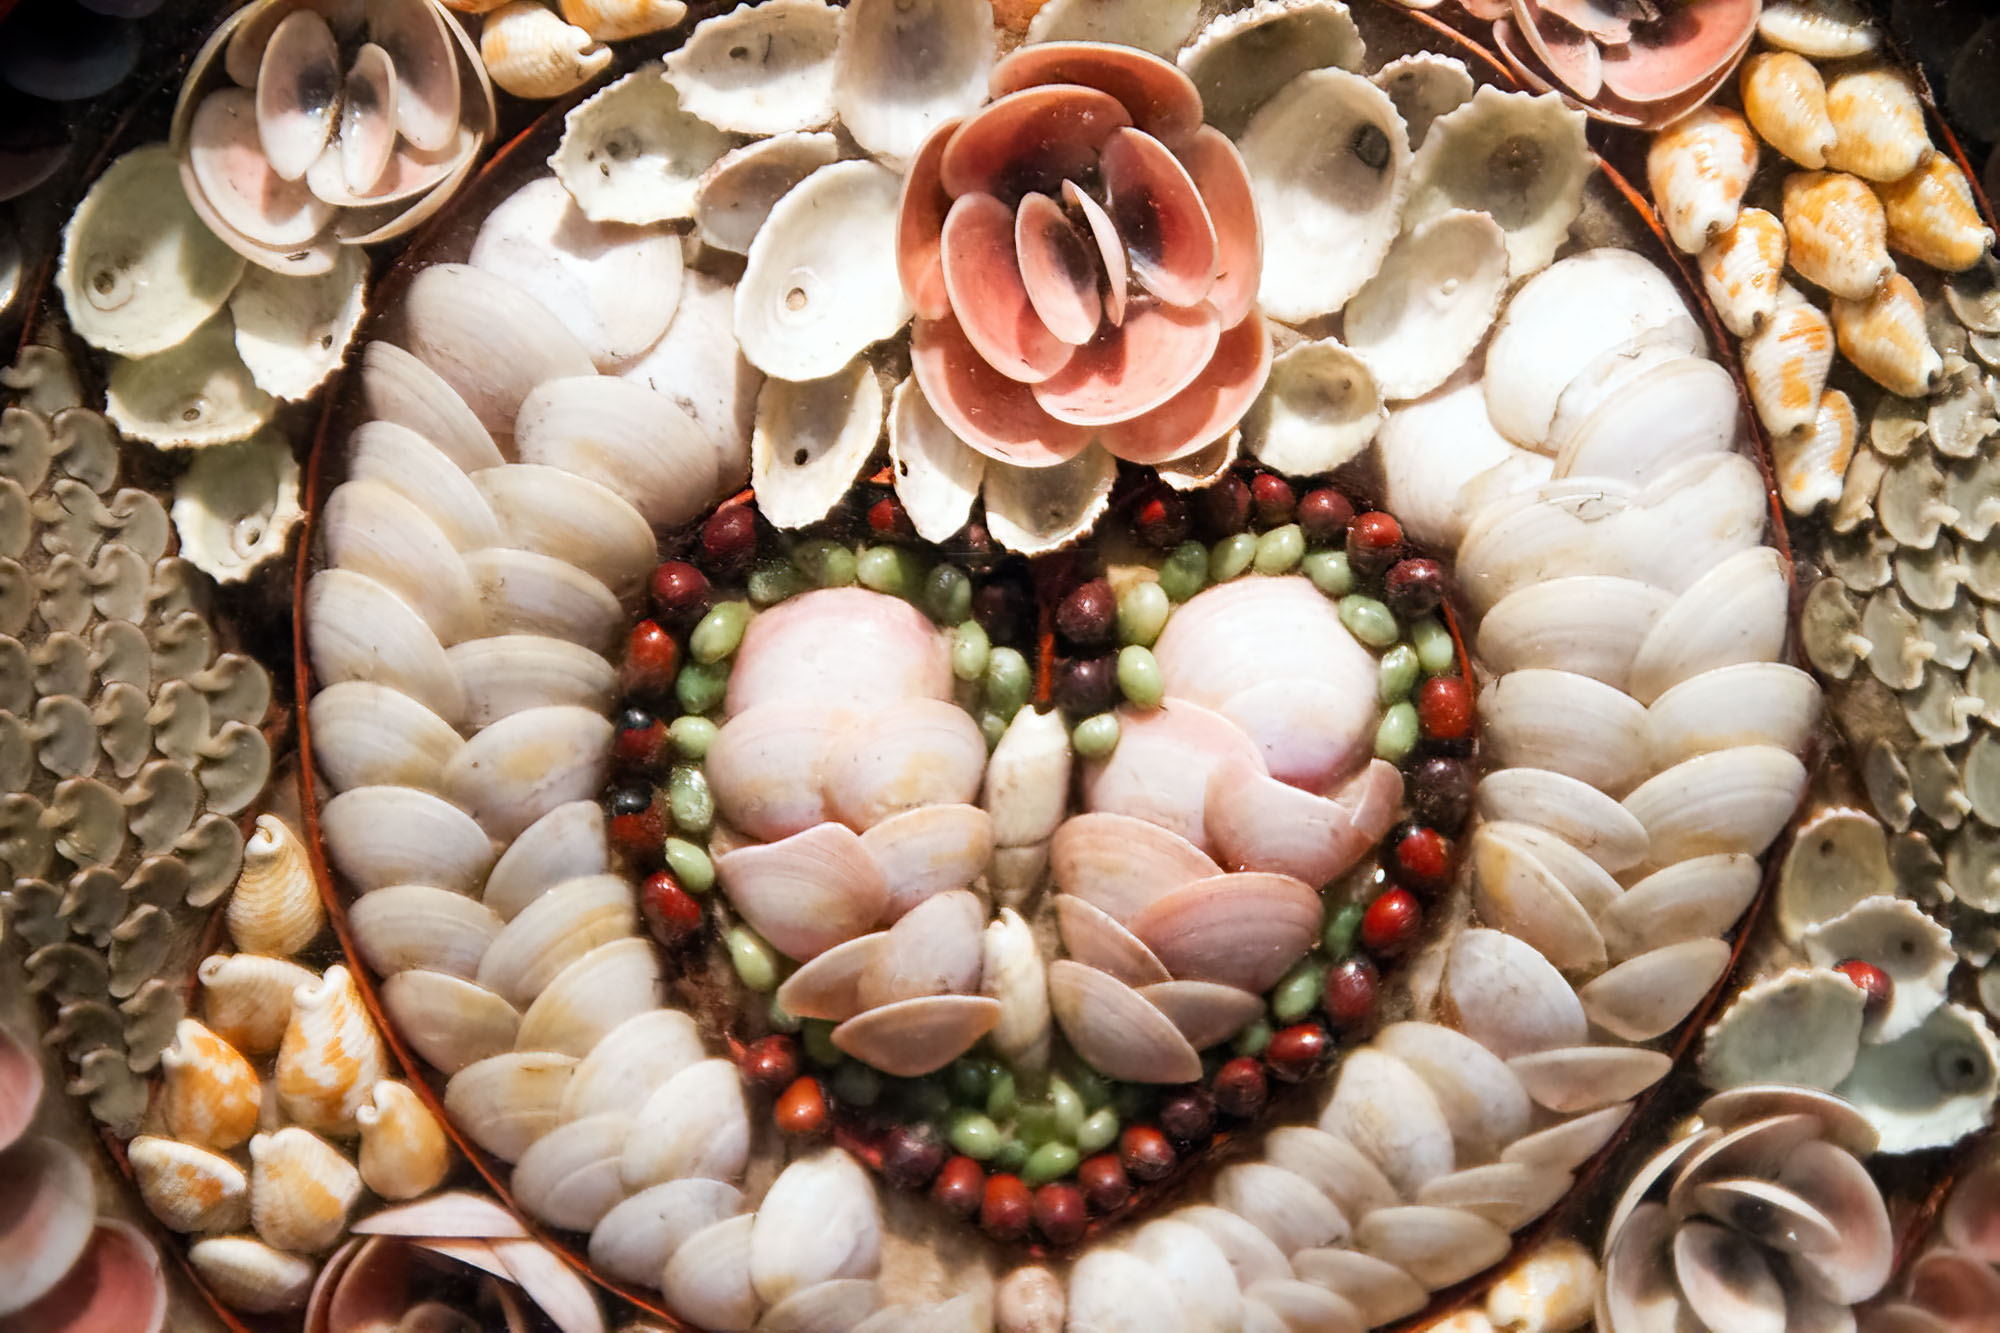 Art piece made, heart made out of seashells